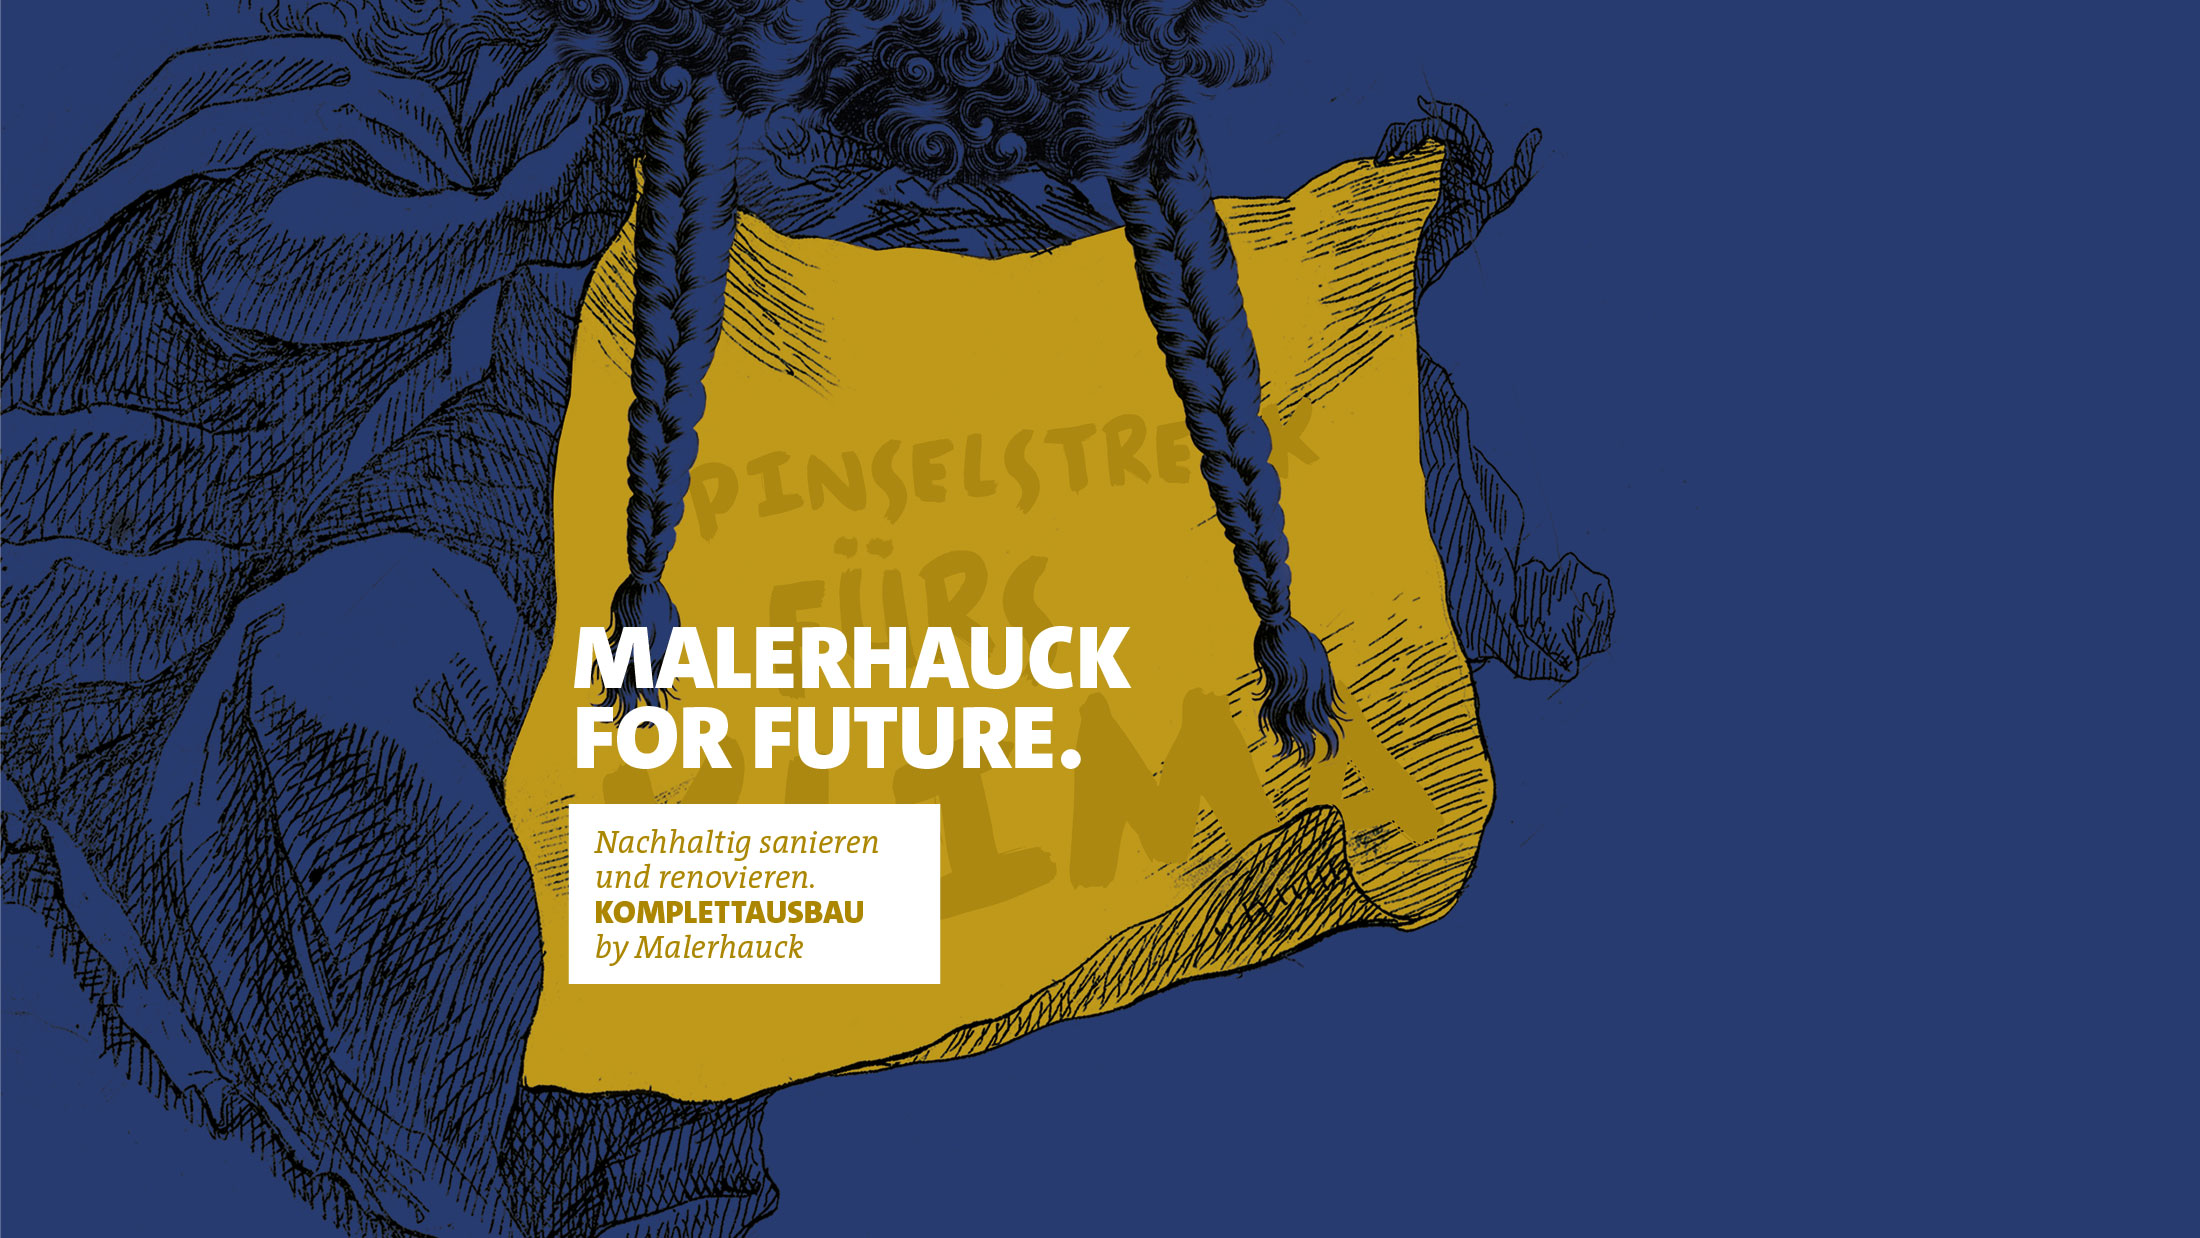 Malerhauck for future